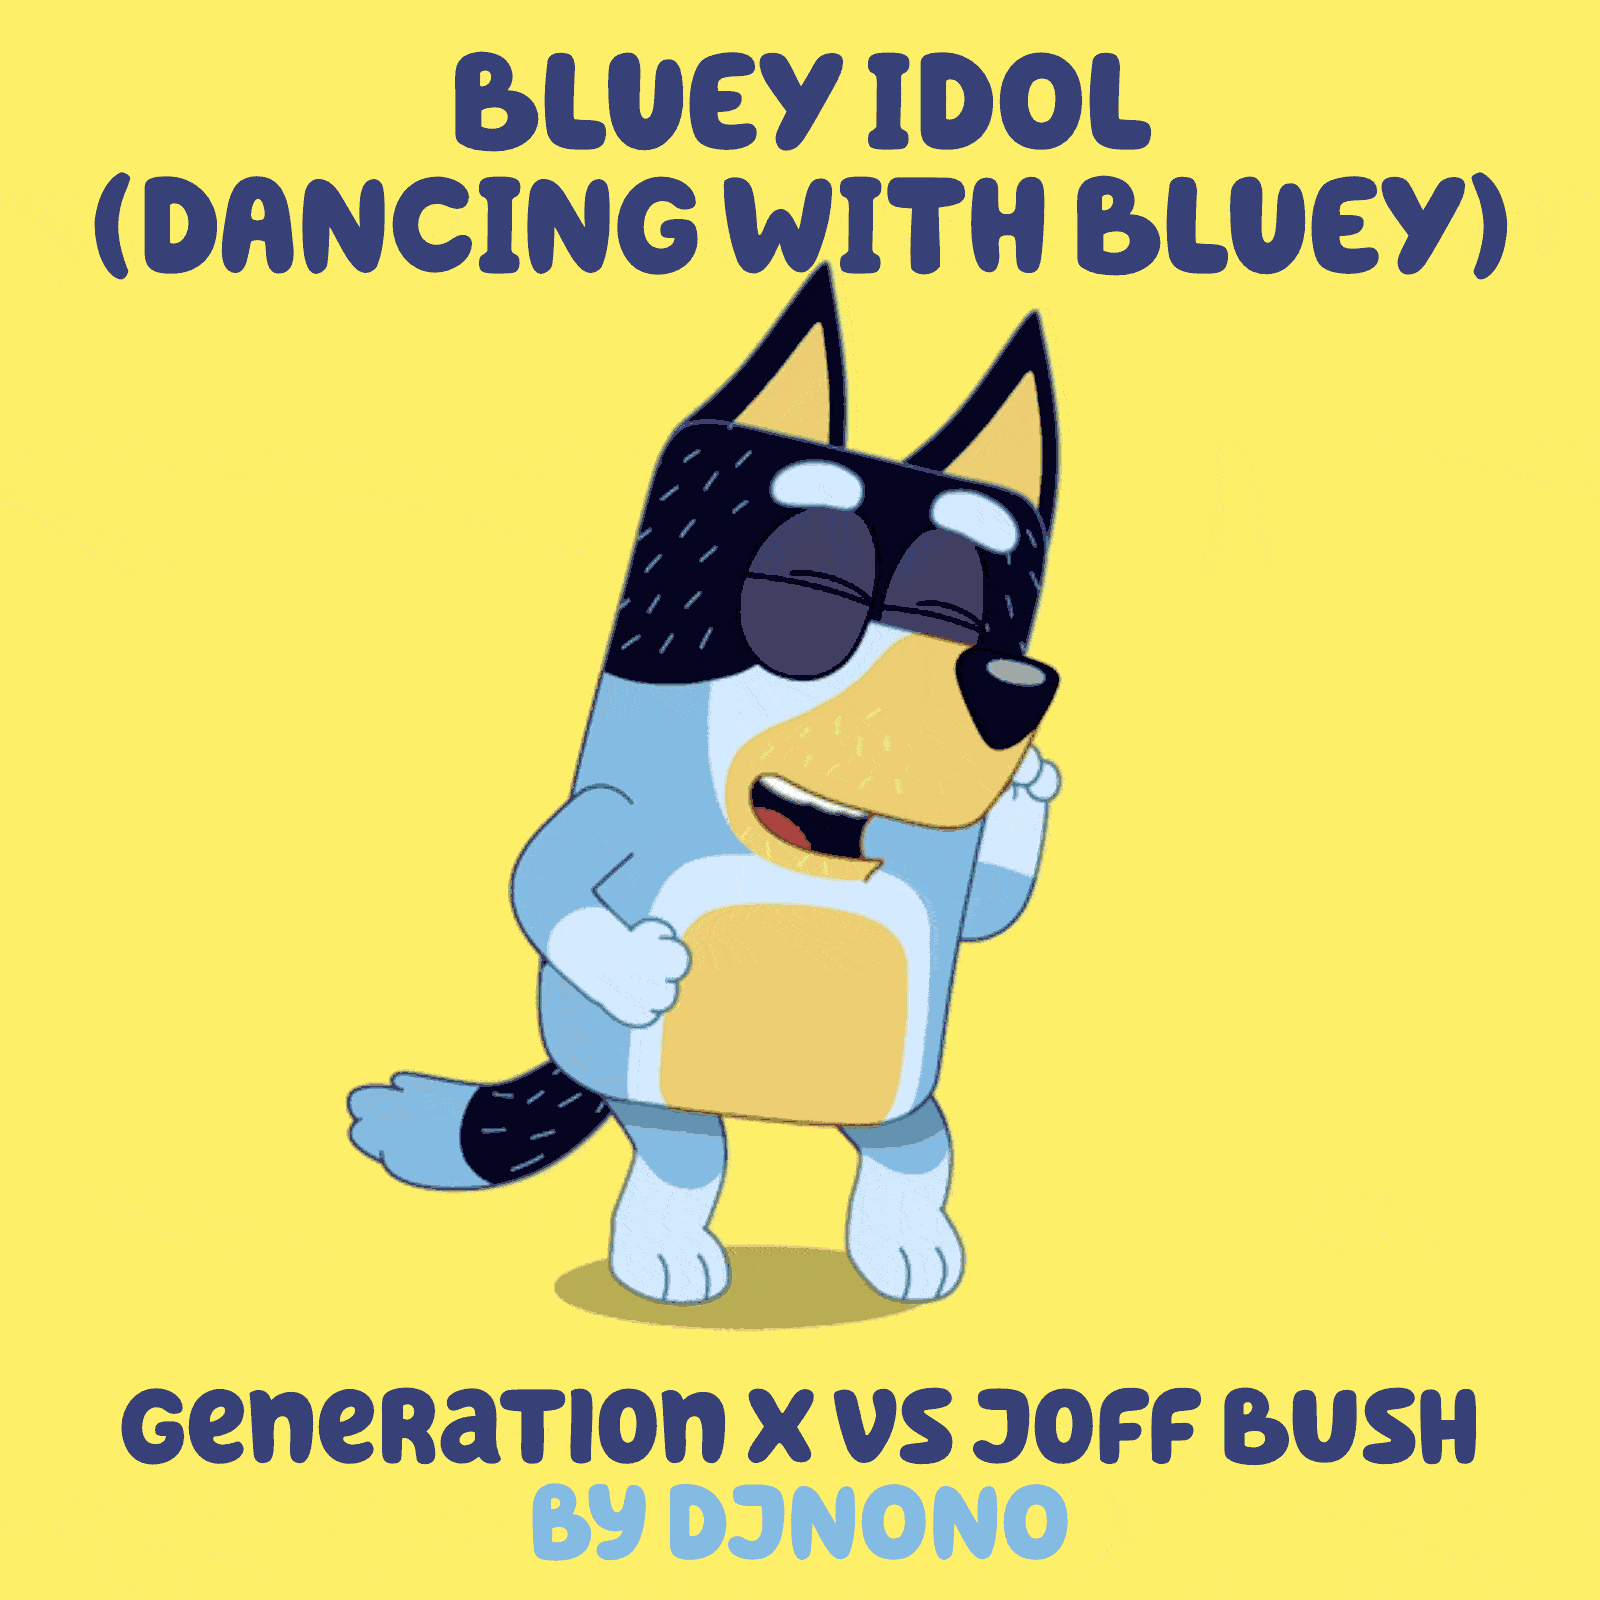 DJNoNo - Bluey Idol (Dancing With Bluey) (Generation X vs Joff Bush) animated gif mashup cover